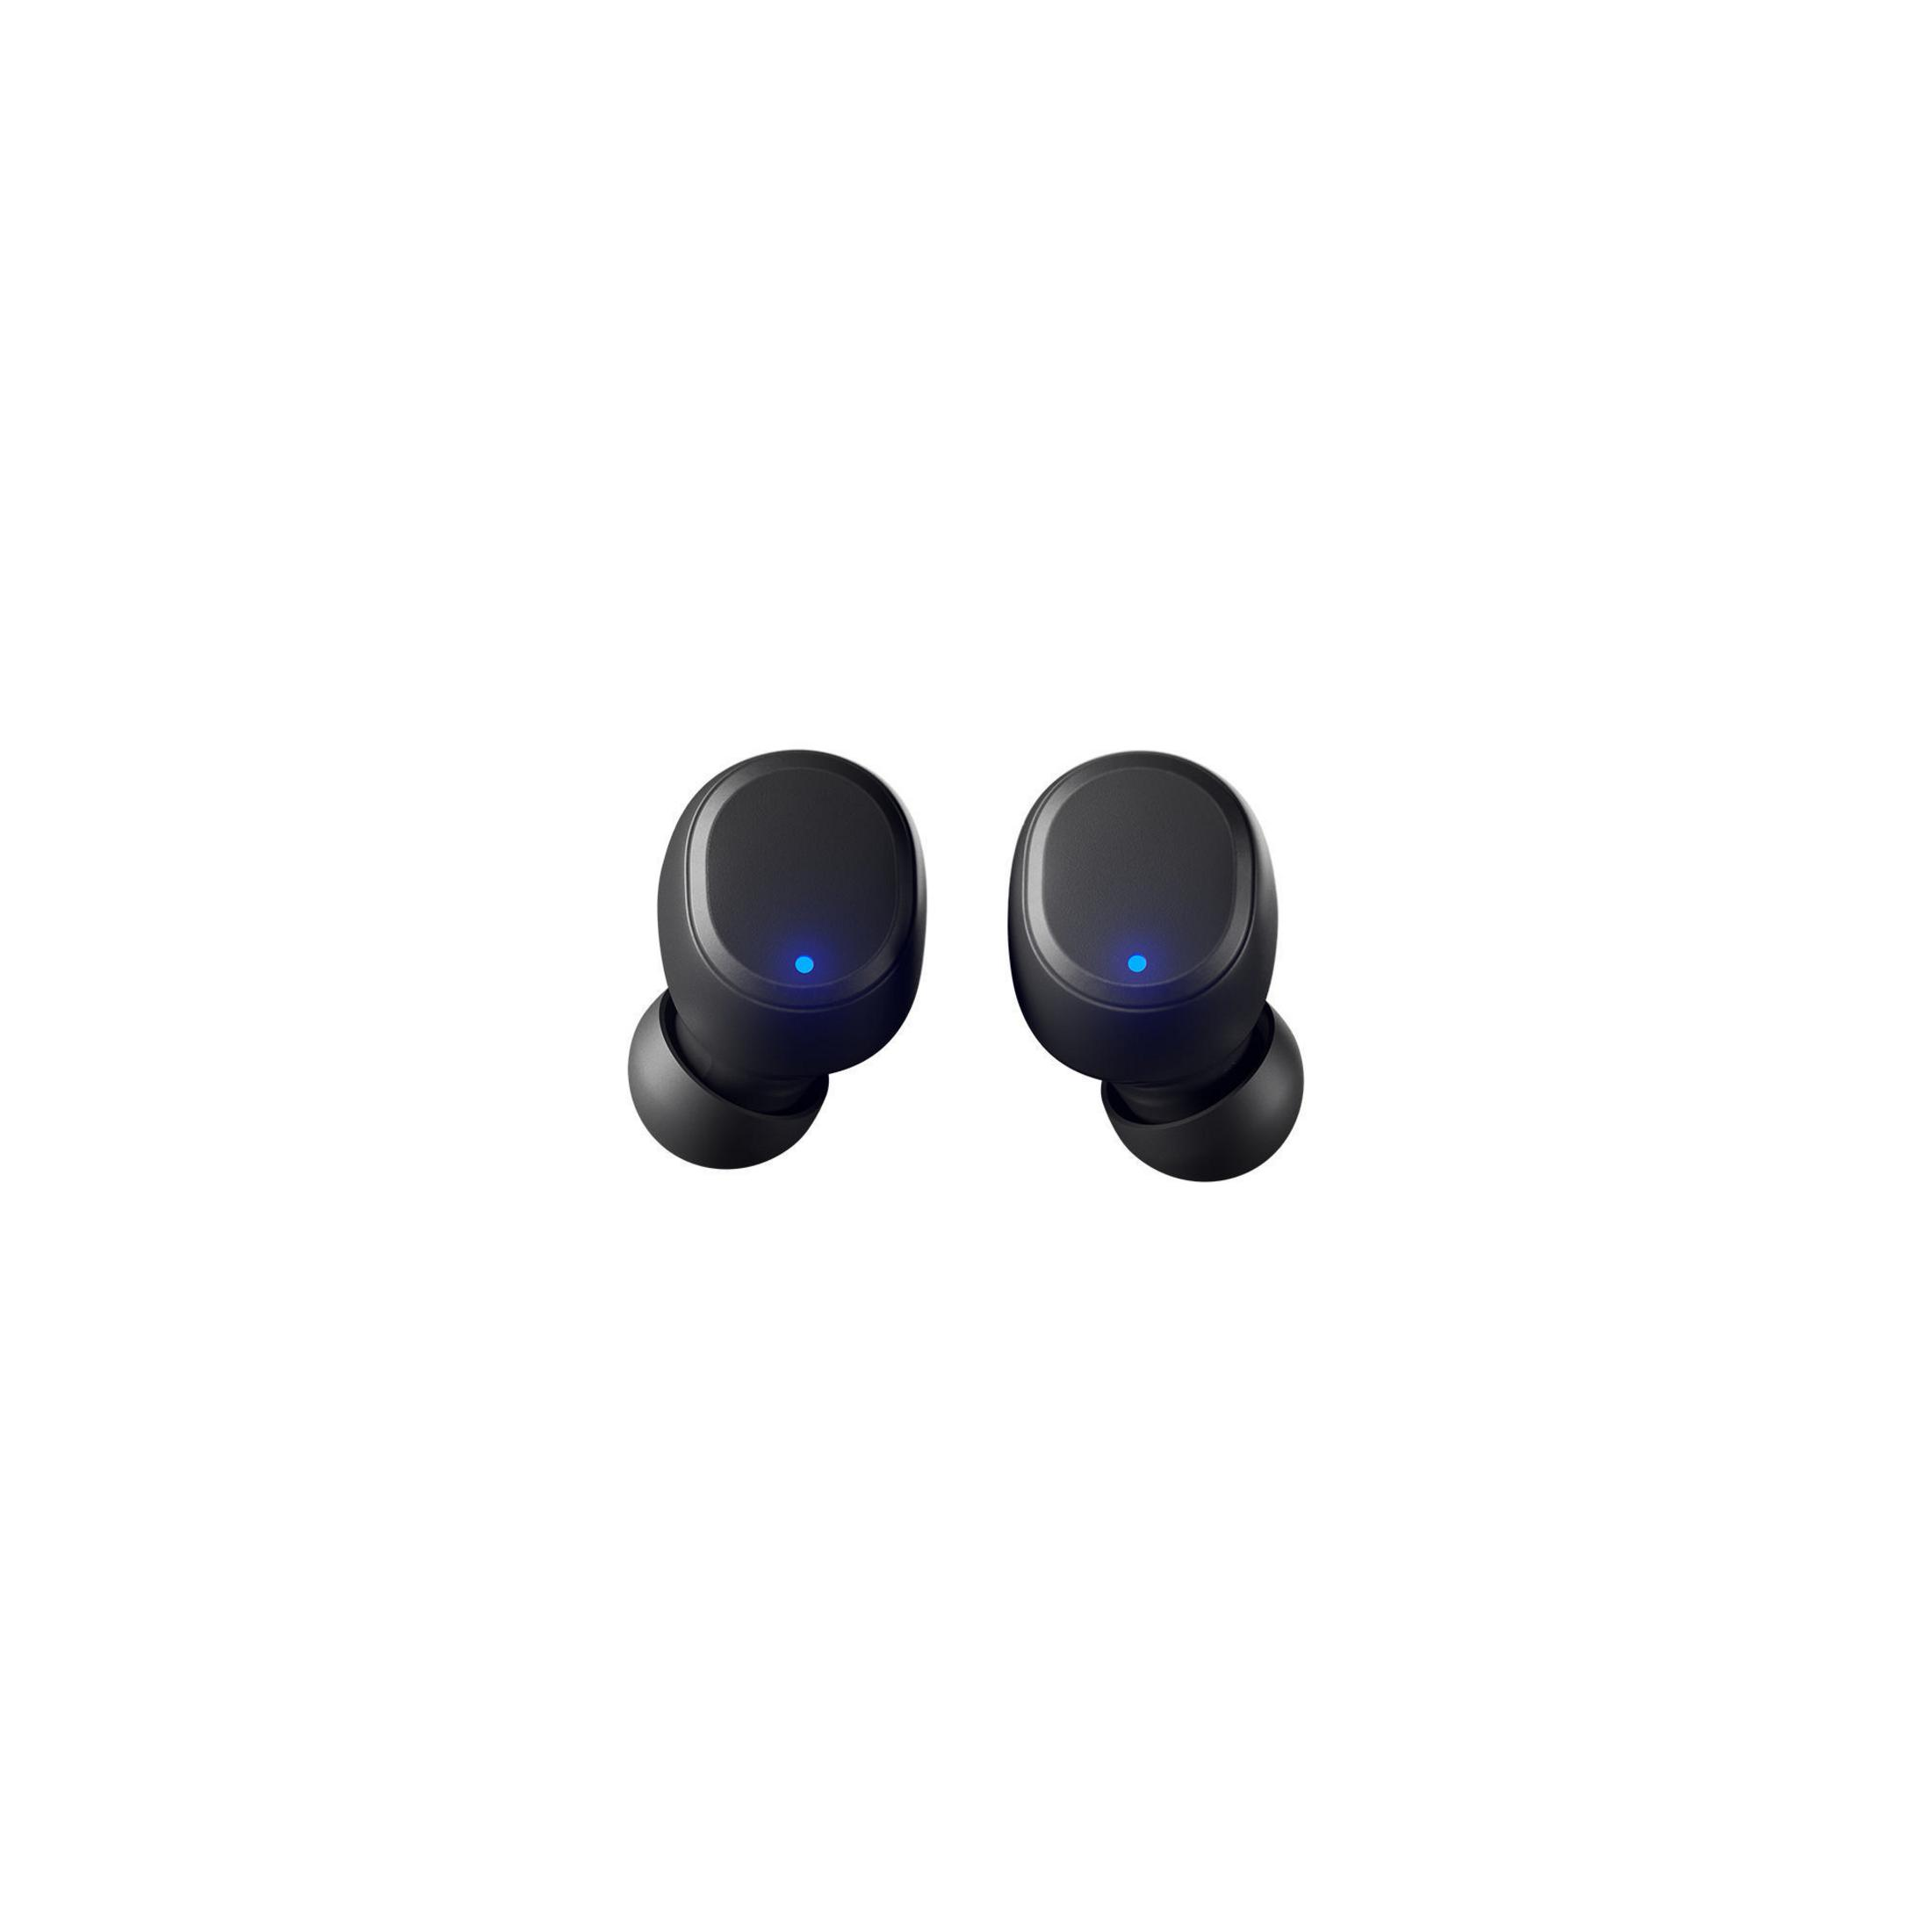 TW Schwarz SPOKE Kopfhörer Bluetooth SKULLCANDY V2VYW-N161 BLACK, In-ear